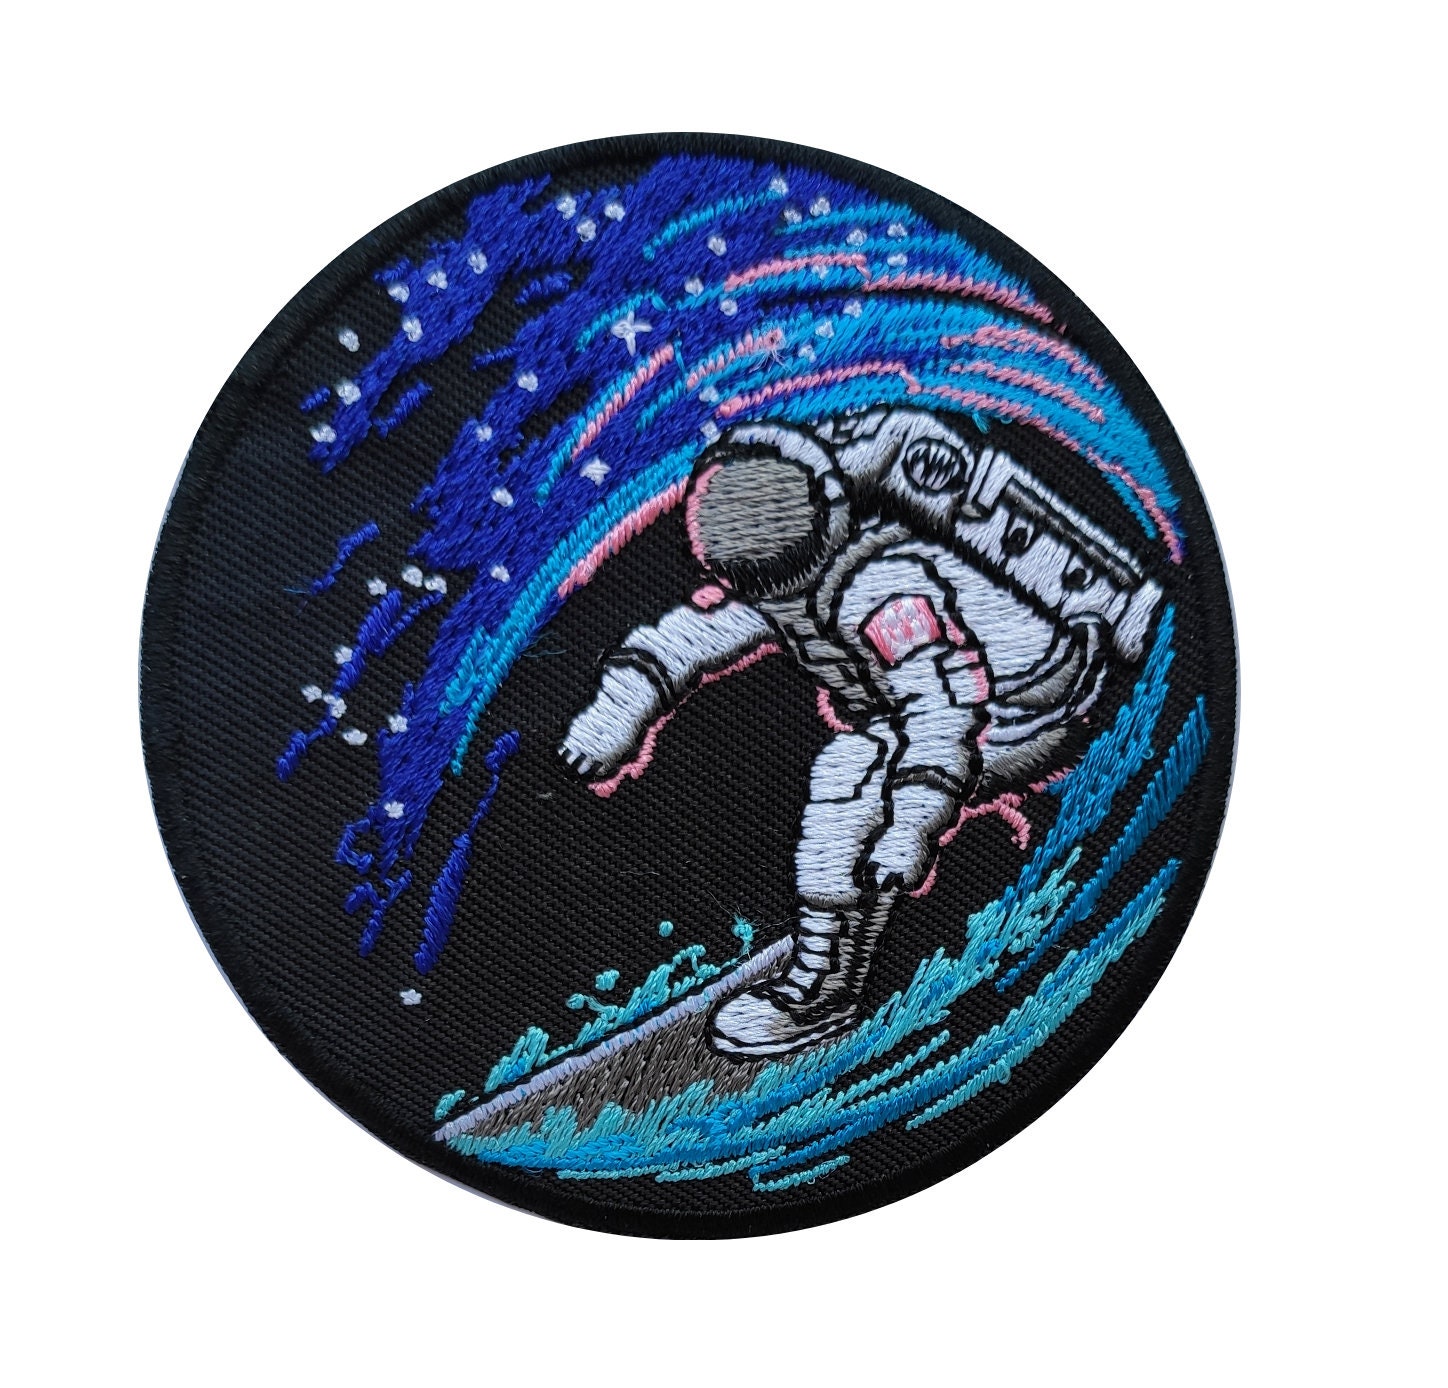 Parche para ropa: Pequeño astronauta – AstronautaLiLi